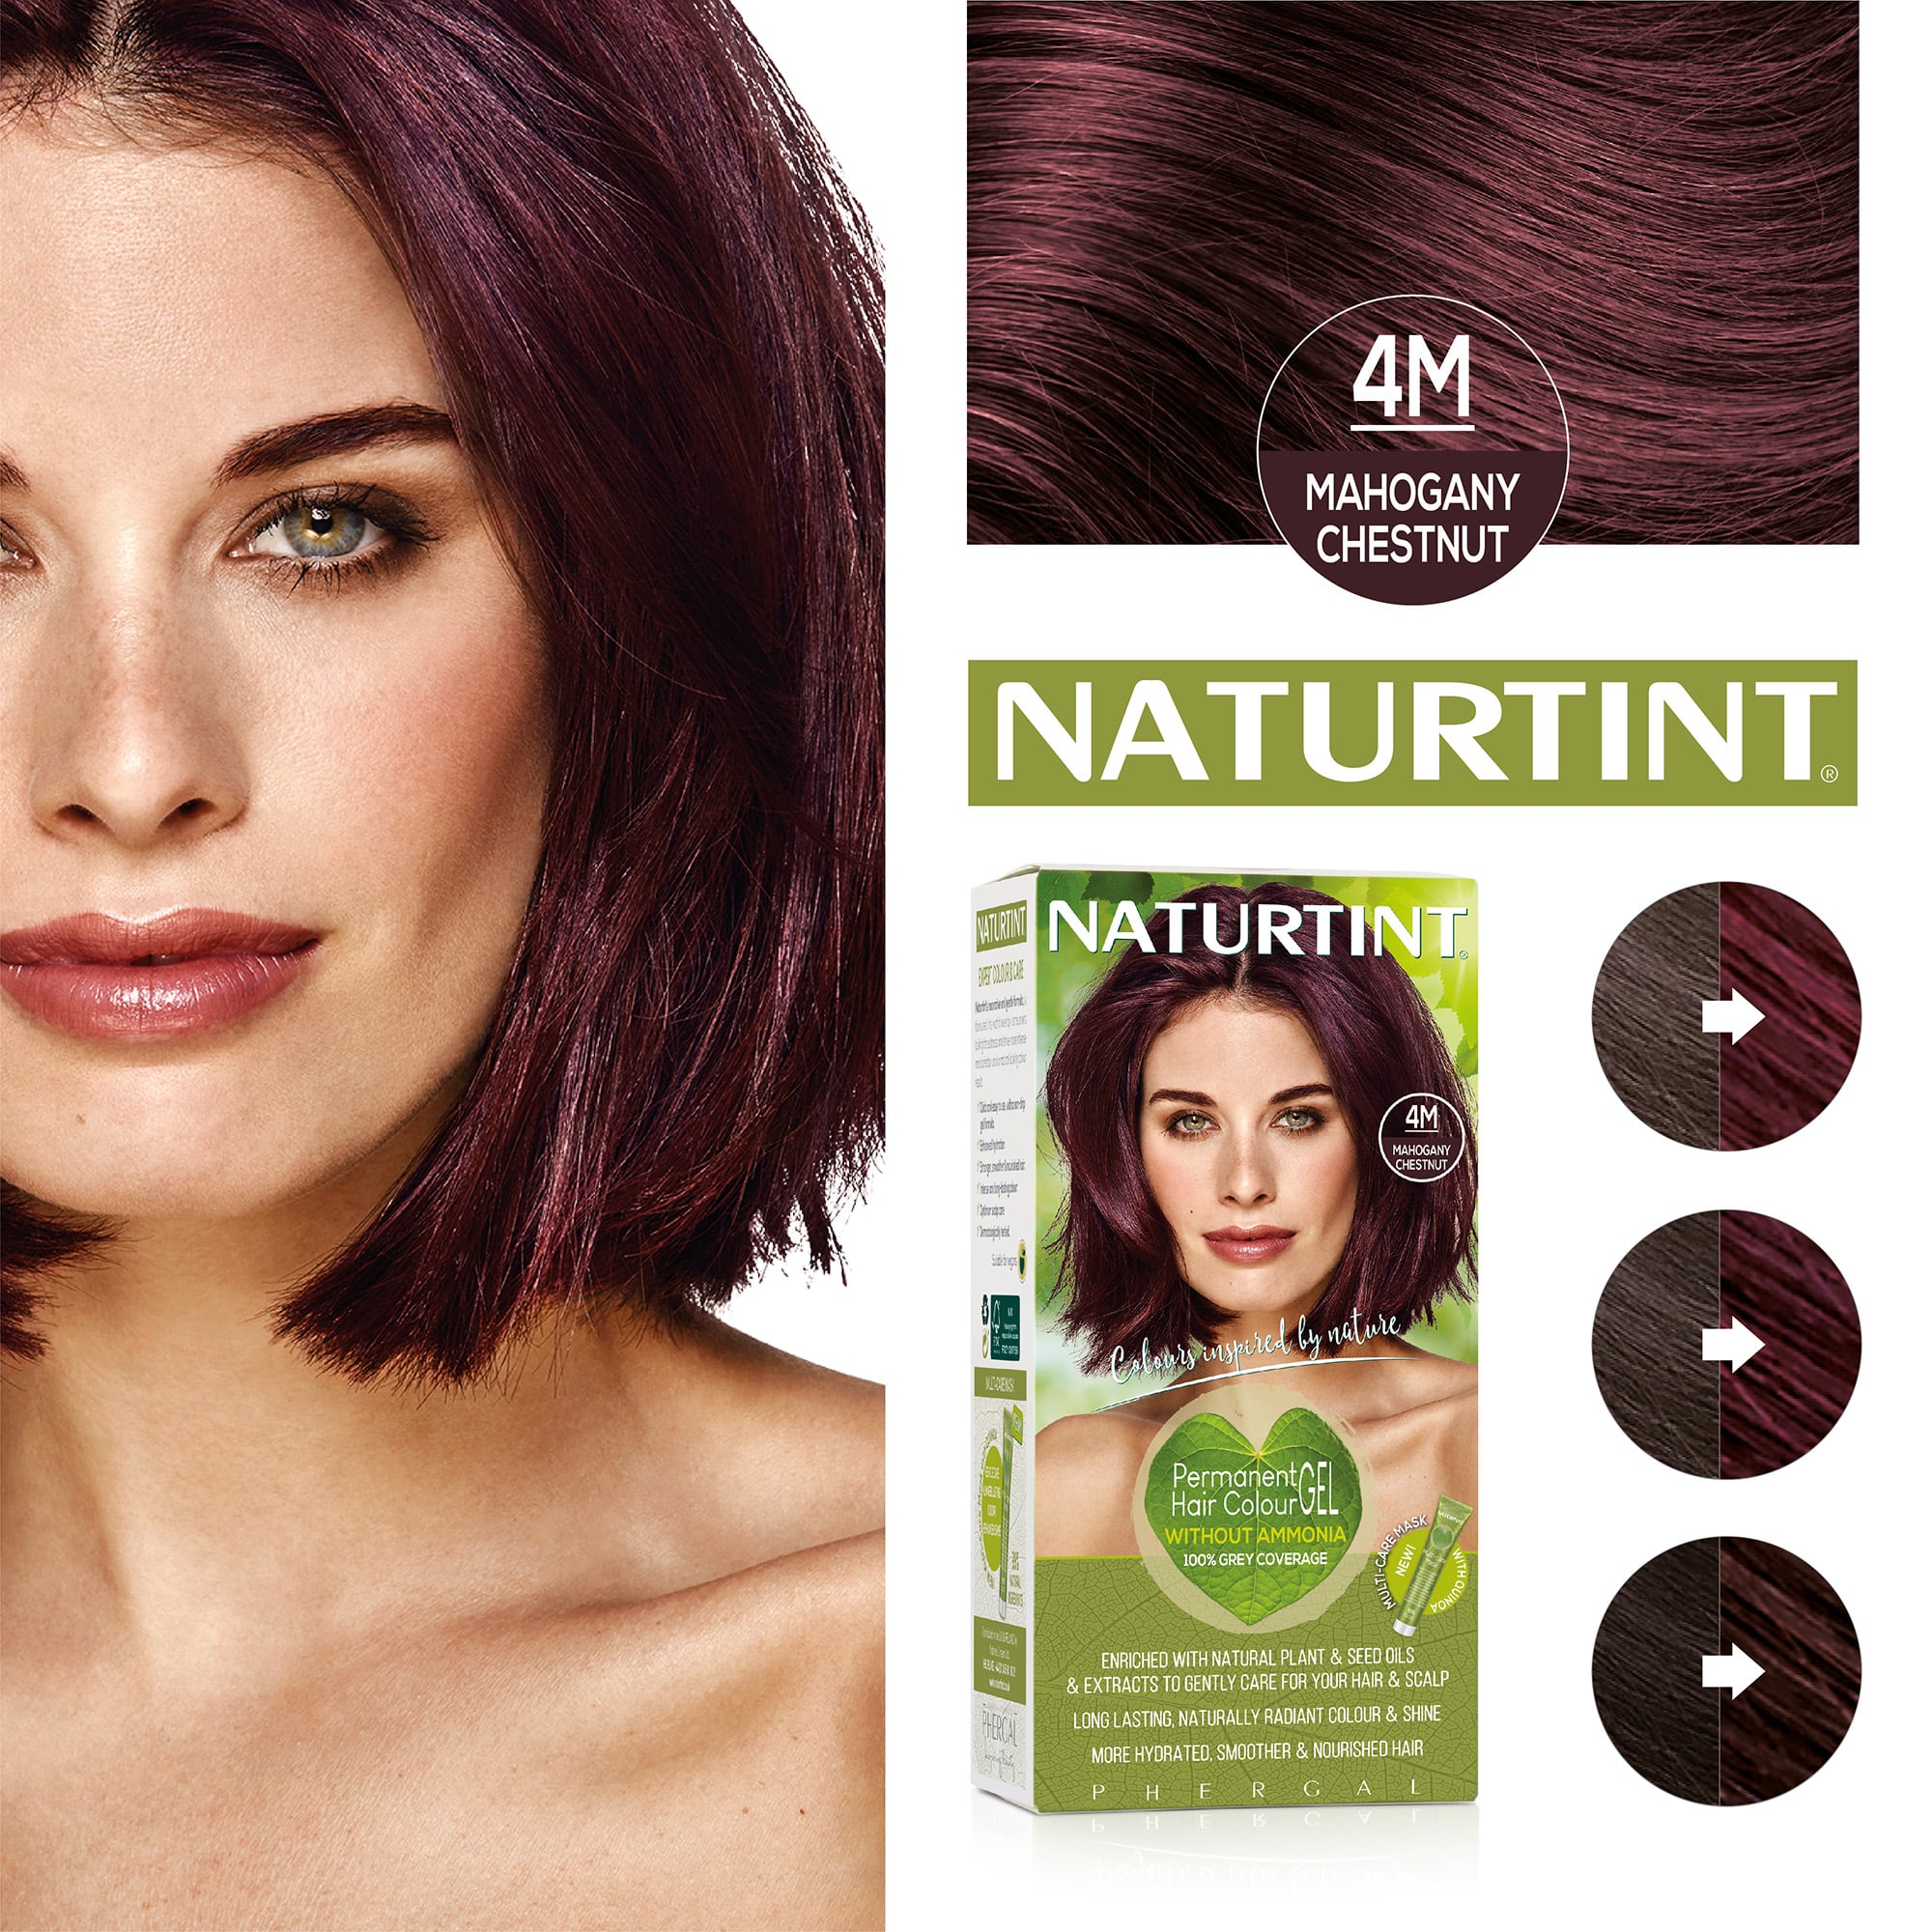 Naturtint Permanent Hair Colour Gel 4M Mahogany Chestnut - 170ml - Naturtint